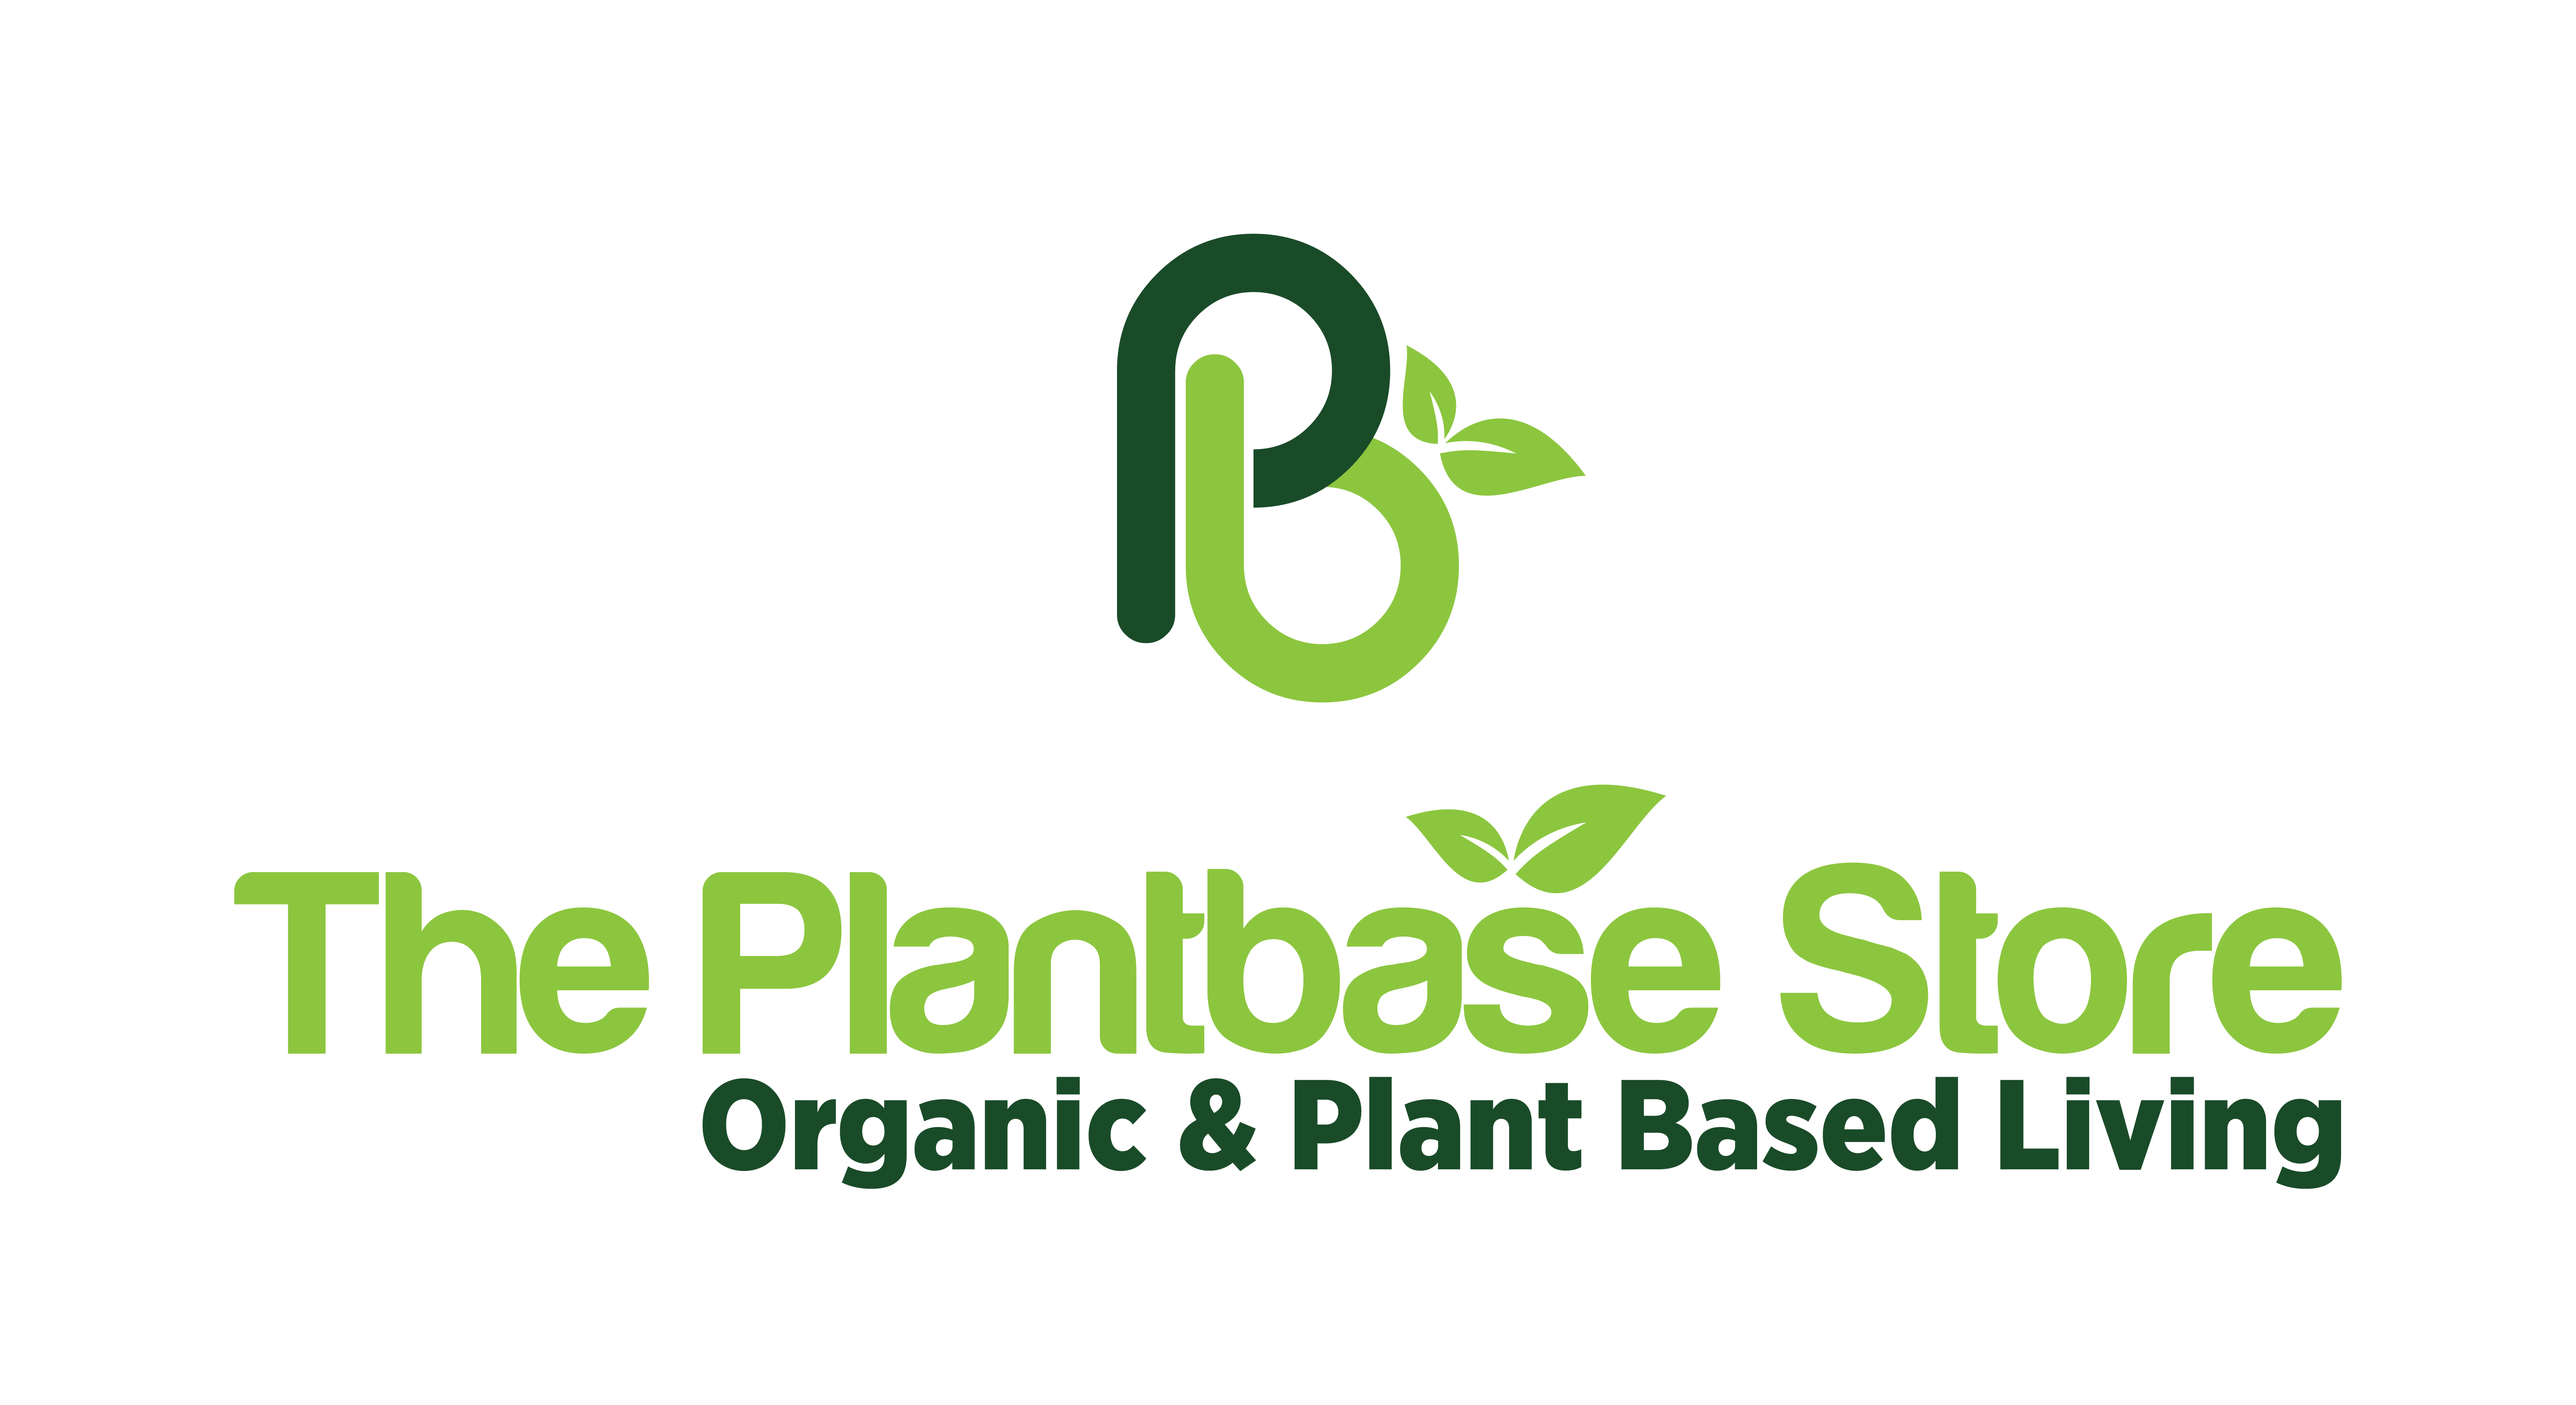 Longdan - The Plantbase Store 